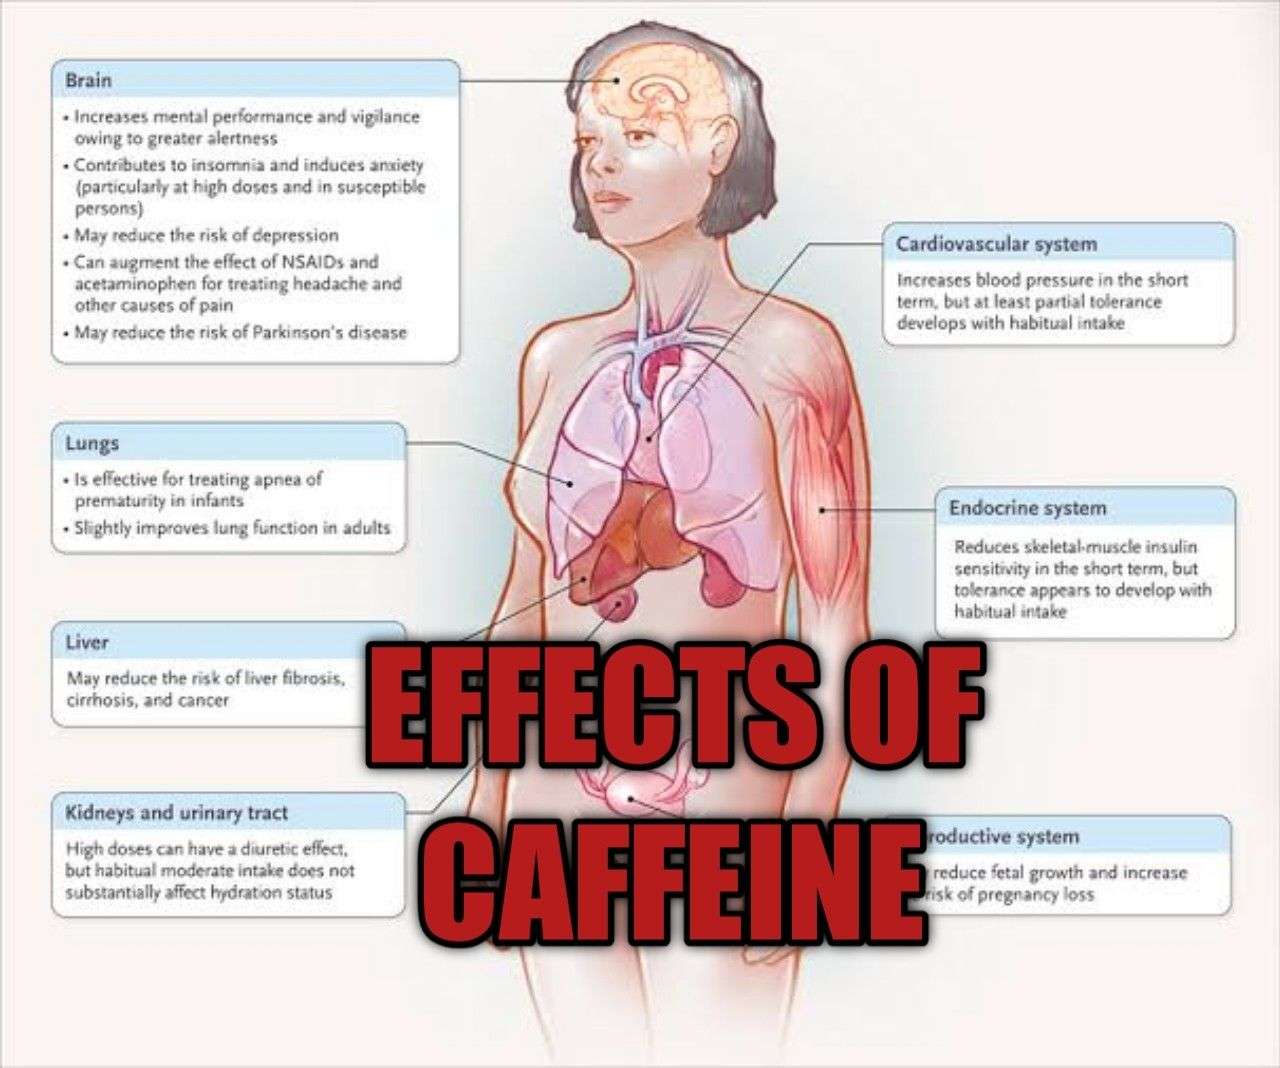 Effects of caffeine on brand